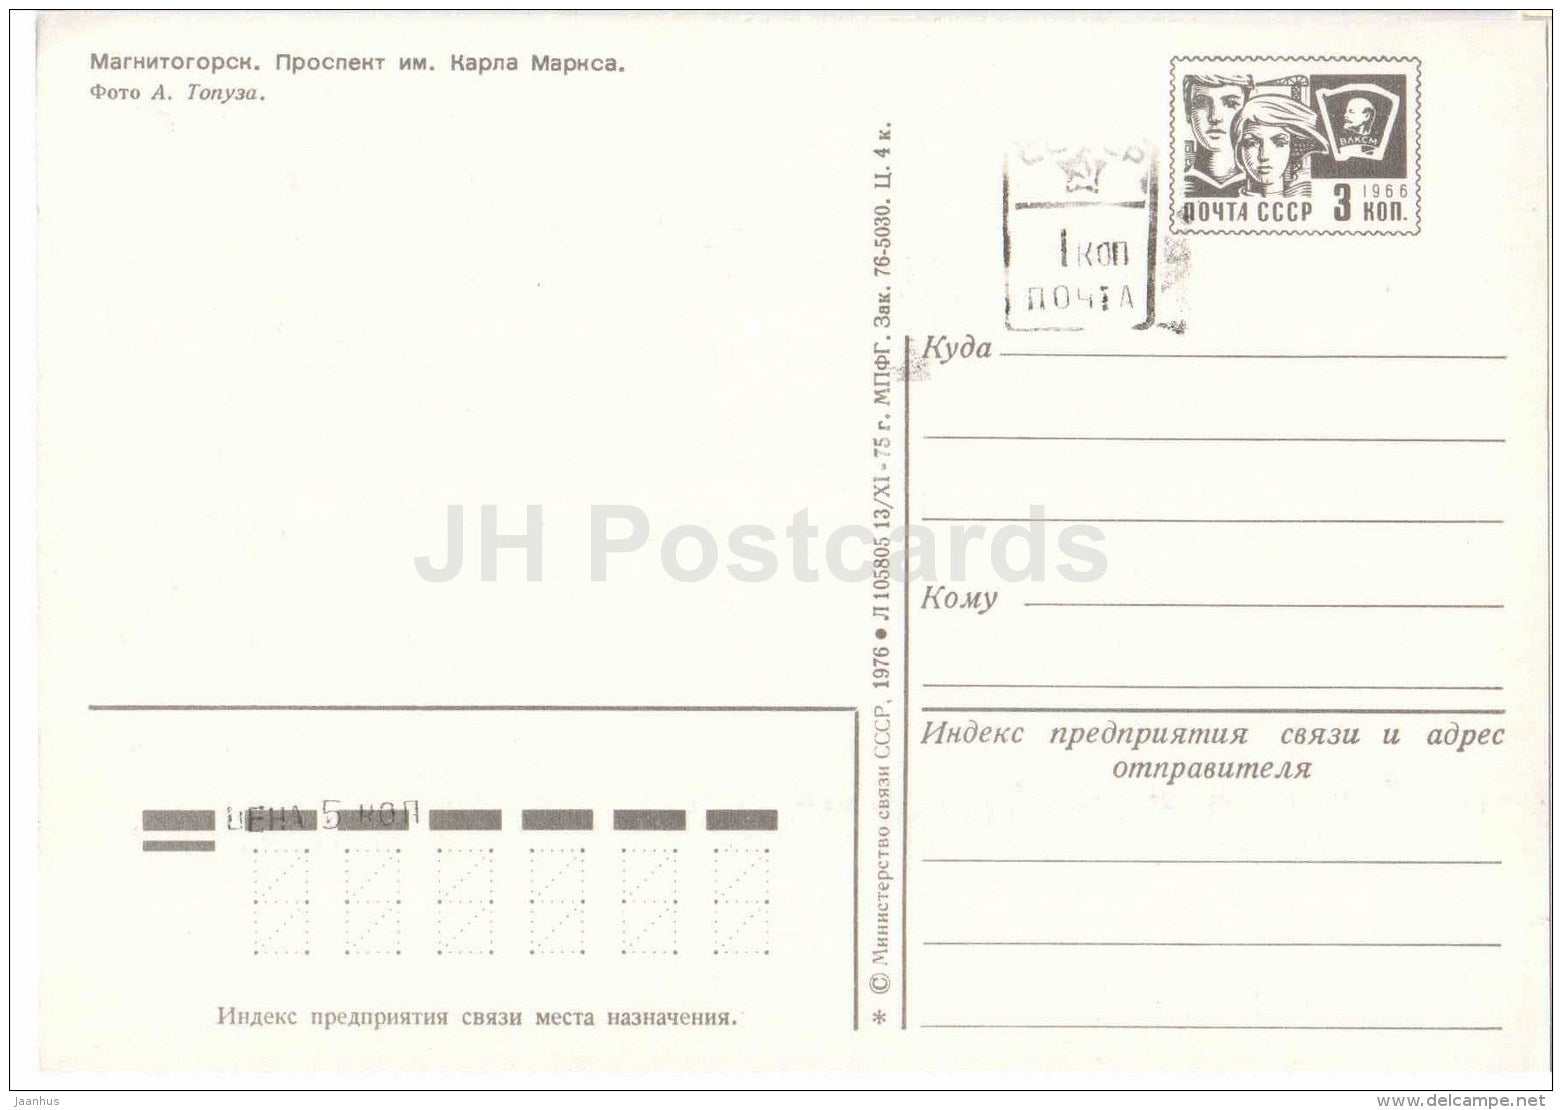 Karl Marx prospekt - avenue - tram - Magnitogorsk - postal stationery - 1976 - Russia USSR - unused - JH Postcards